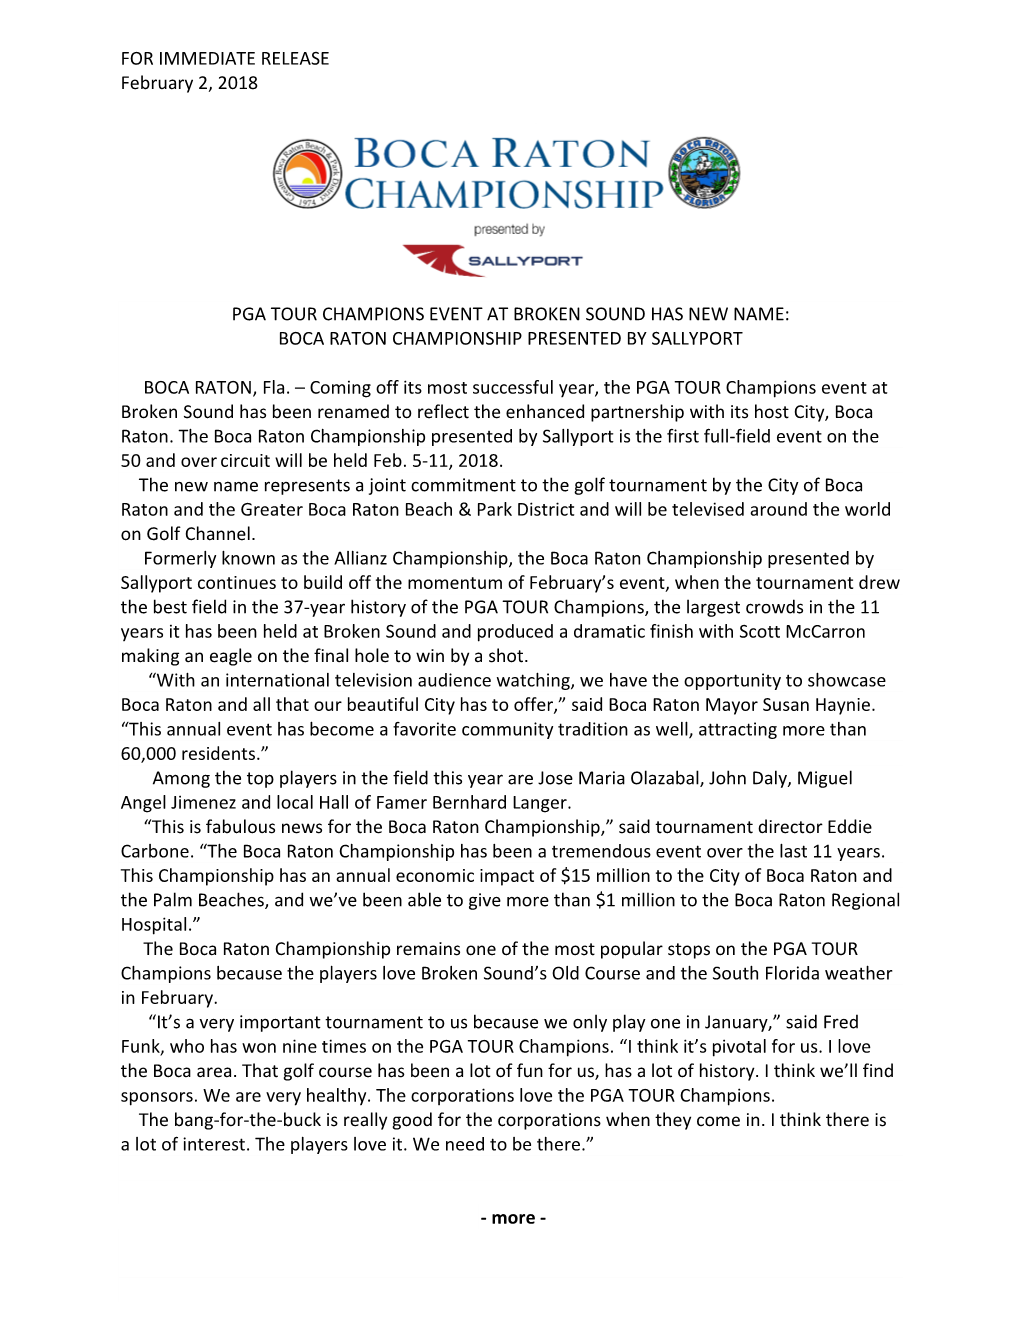 Boca Raton Championship Presented by Sallyport